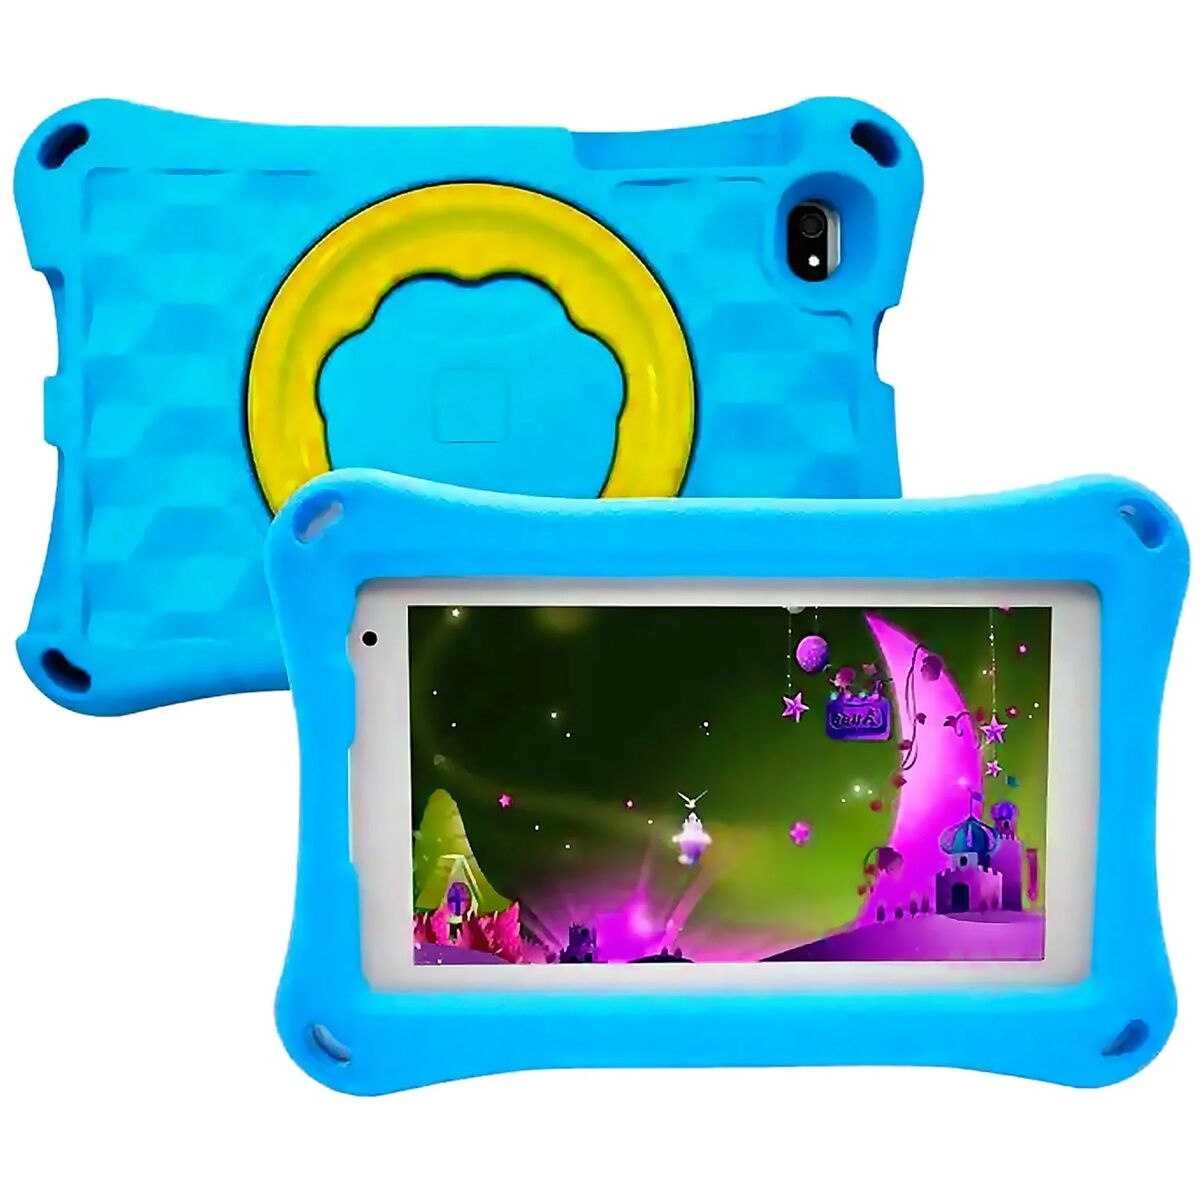 Interaktiv Tablet til Børn K714 Blå 32 GB 2 GB RAM 7"